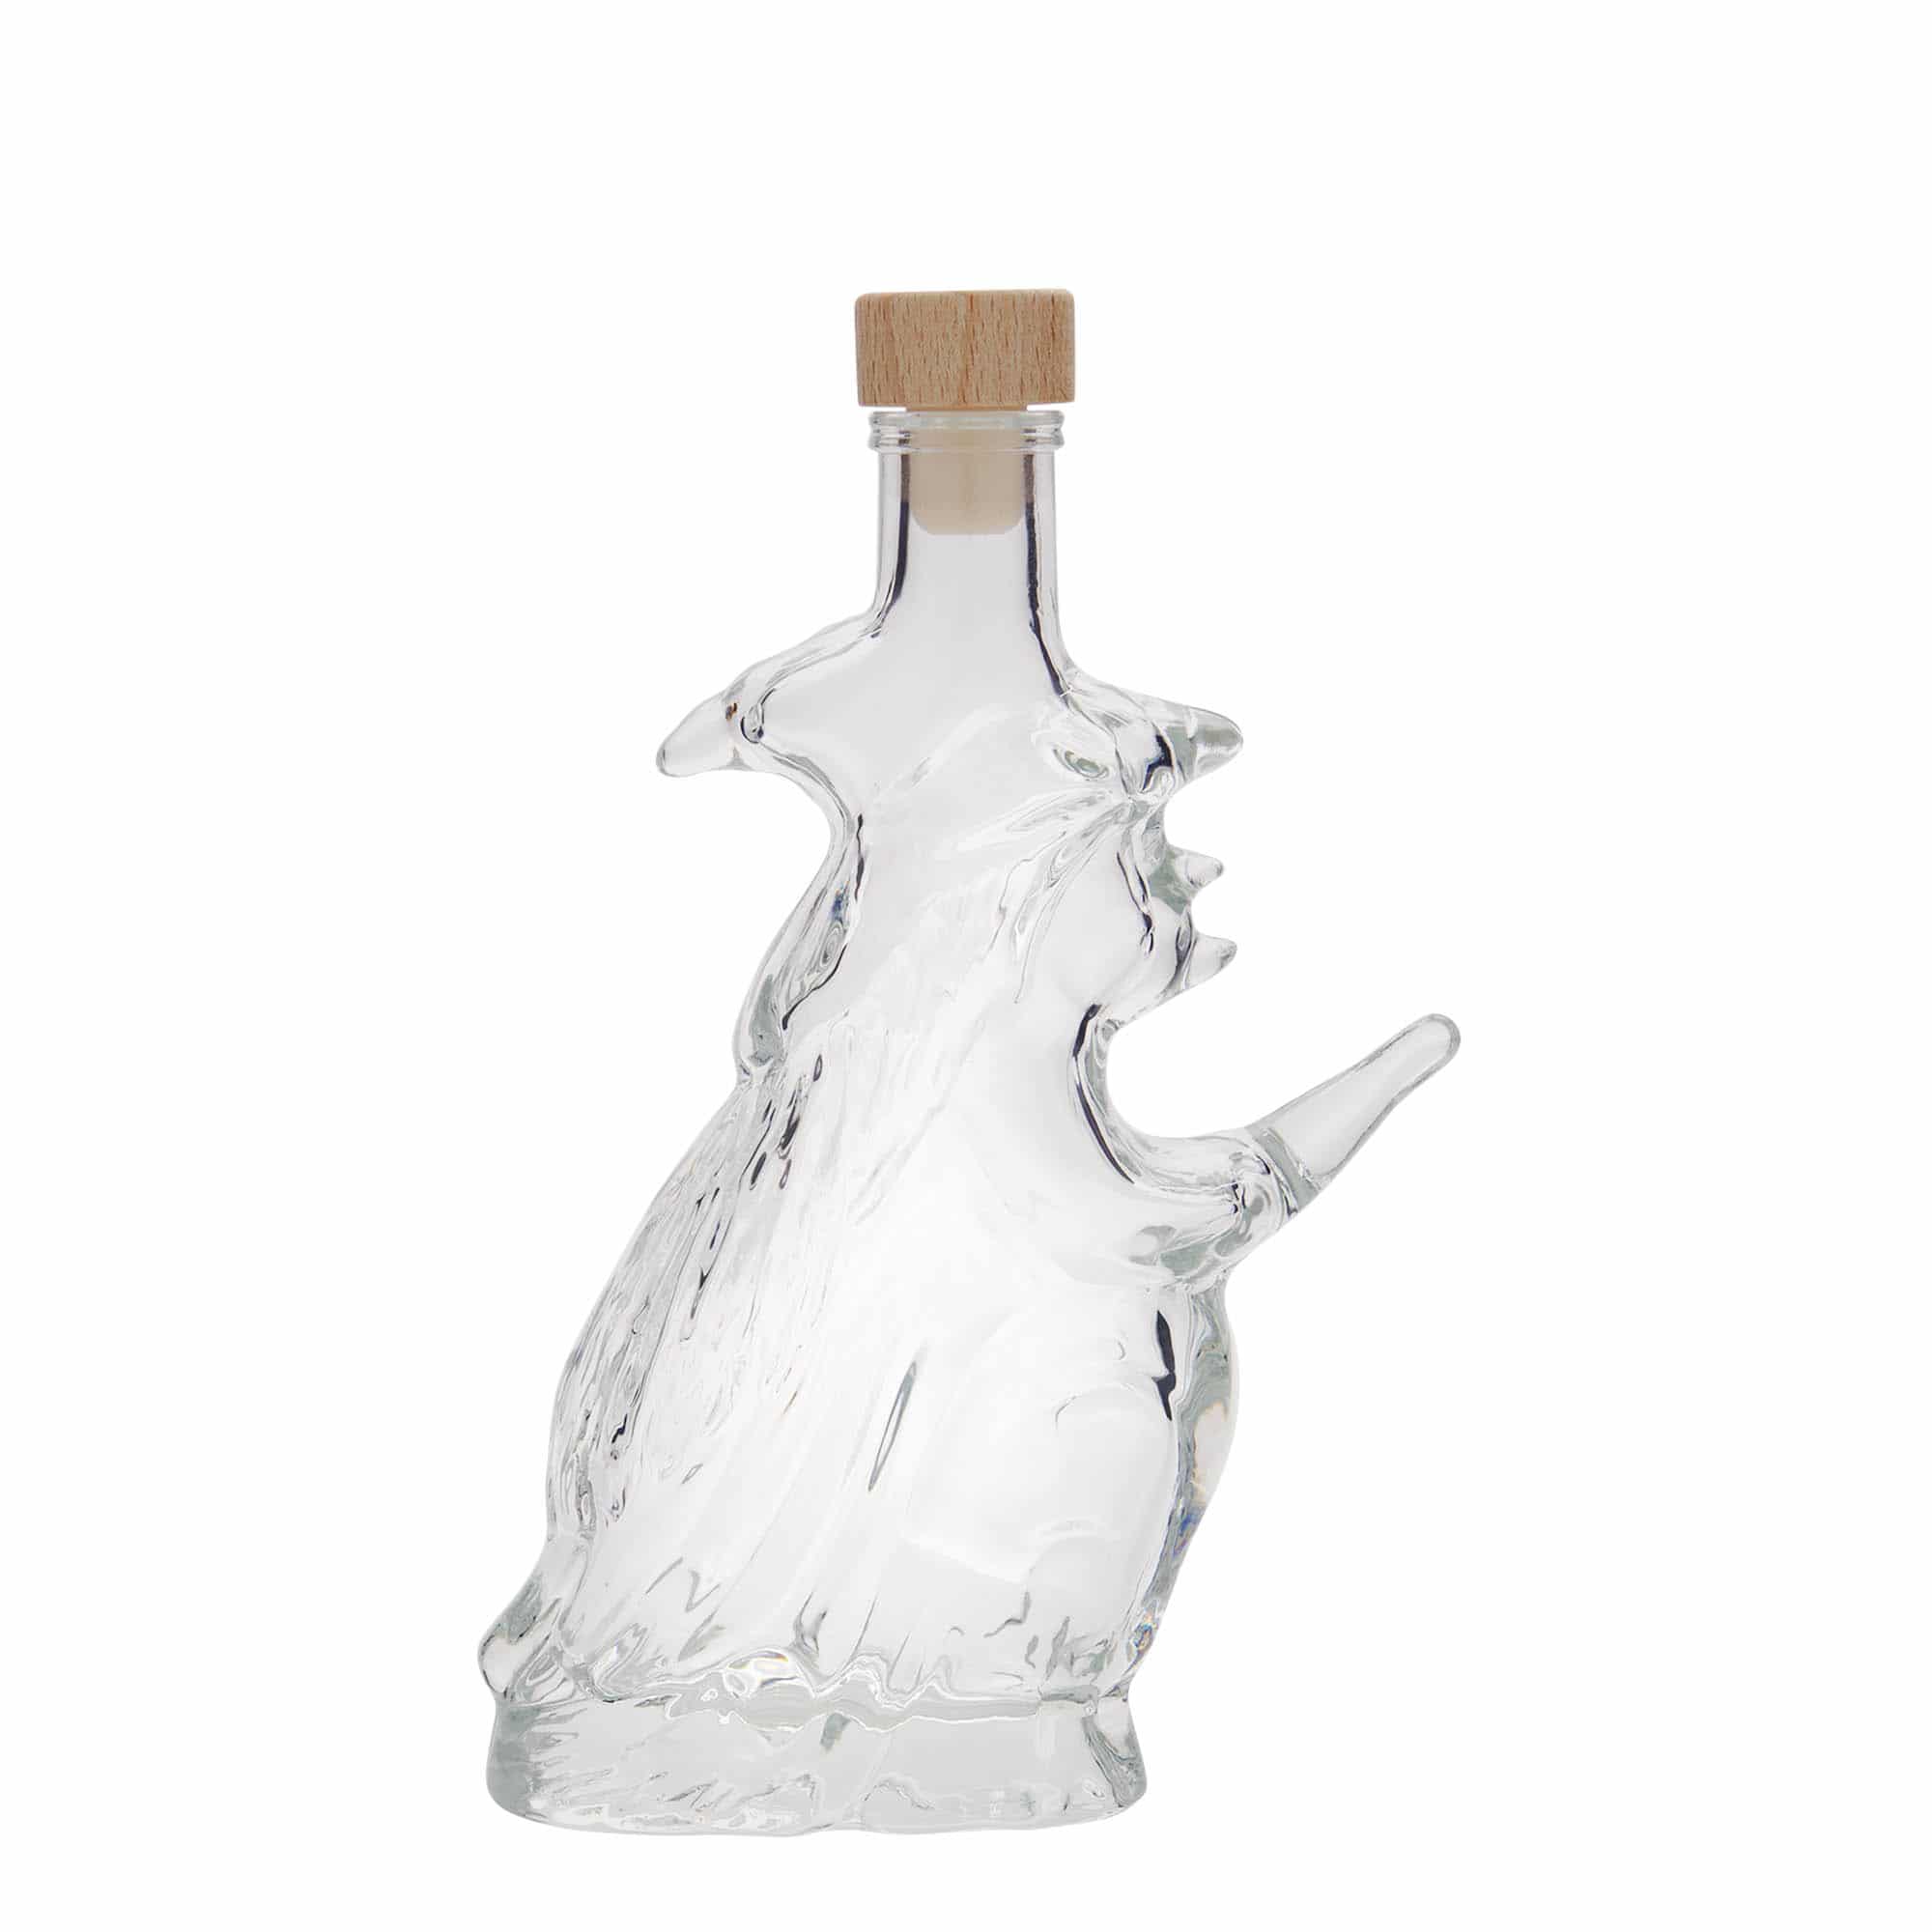 200 ml glass bottle 'Witch', closure: cork